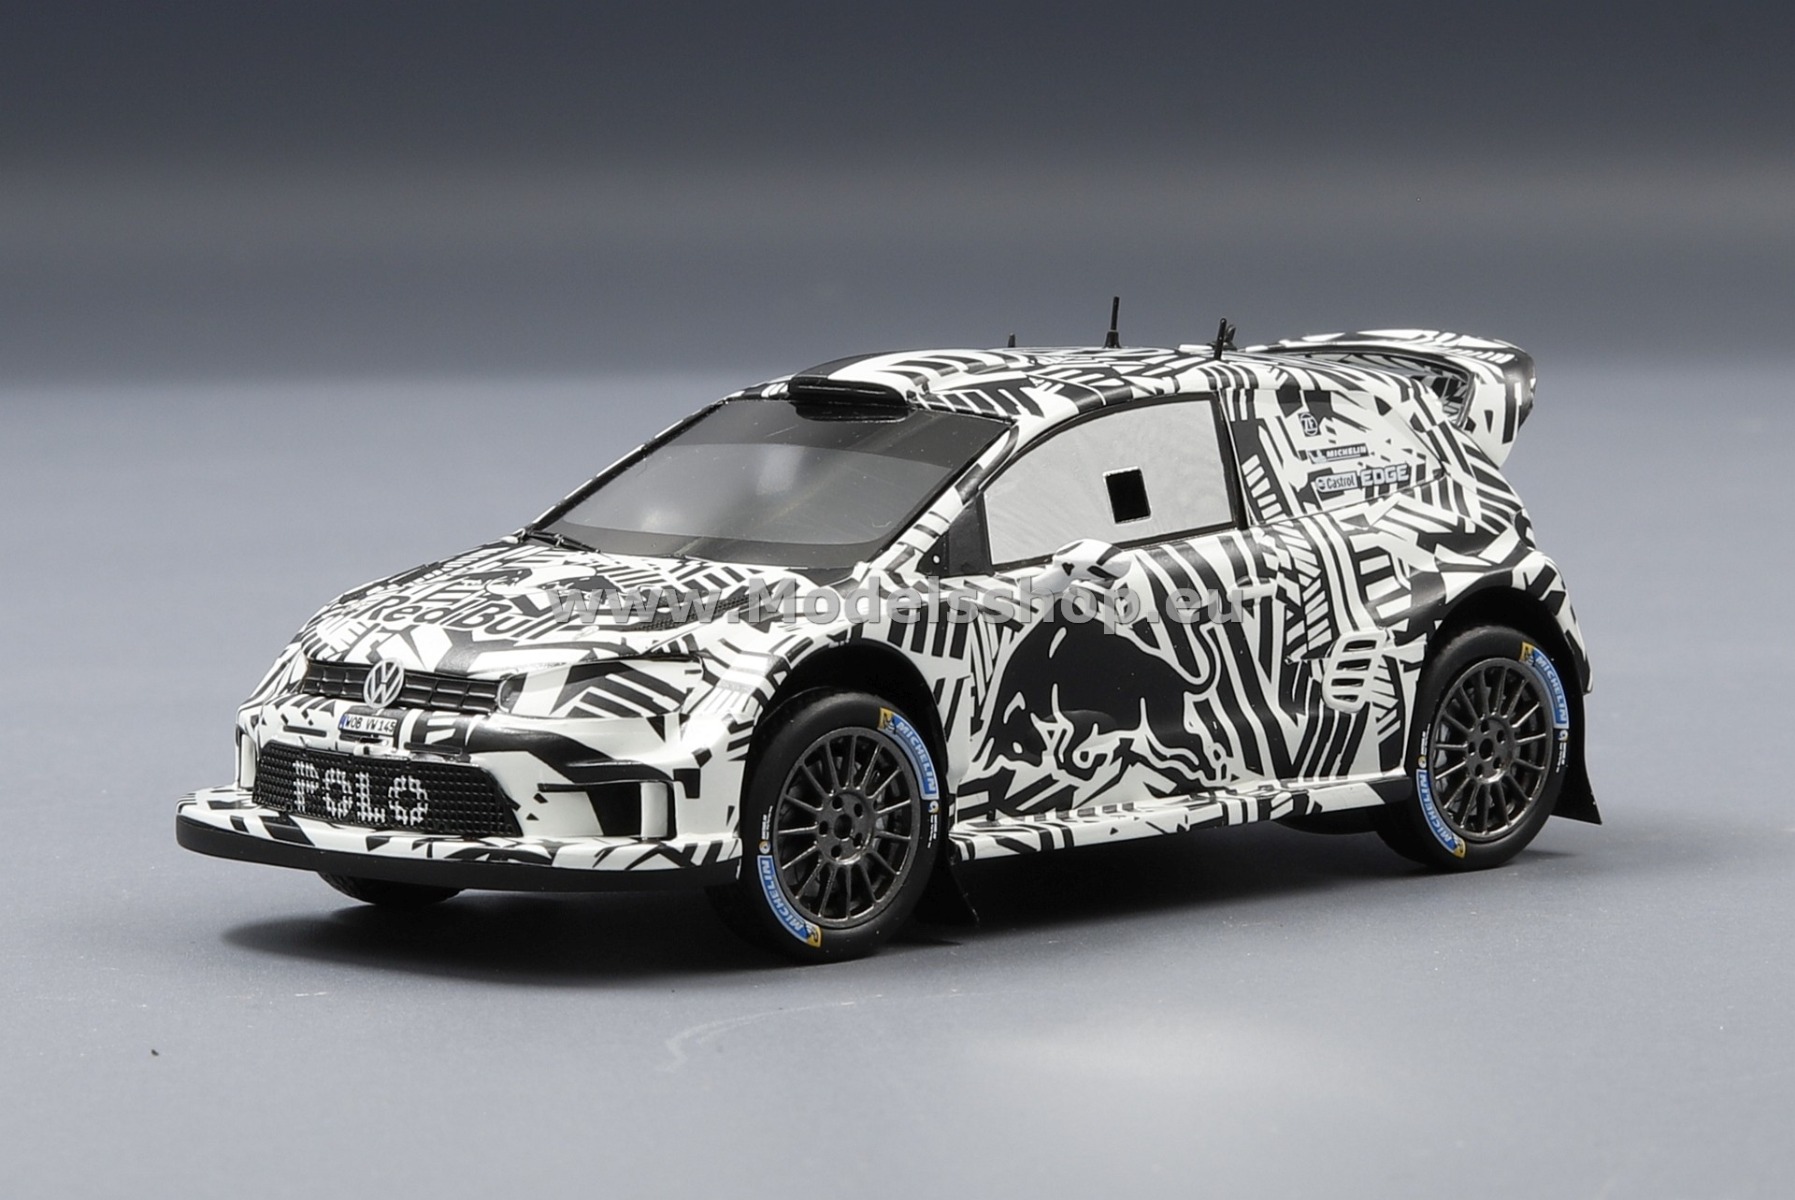 Volkswagen Polo WRC 2017 Test Car